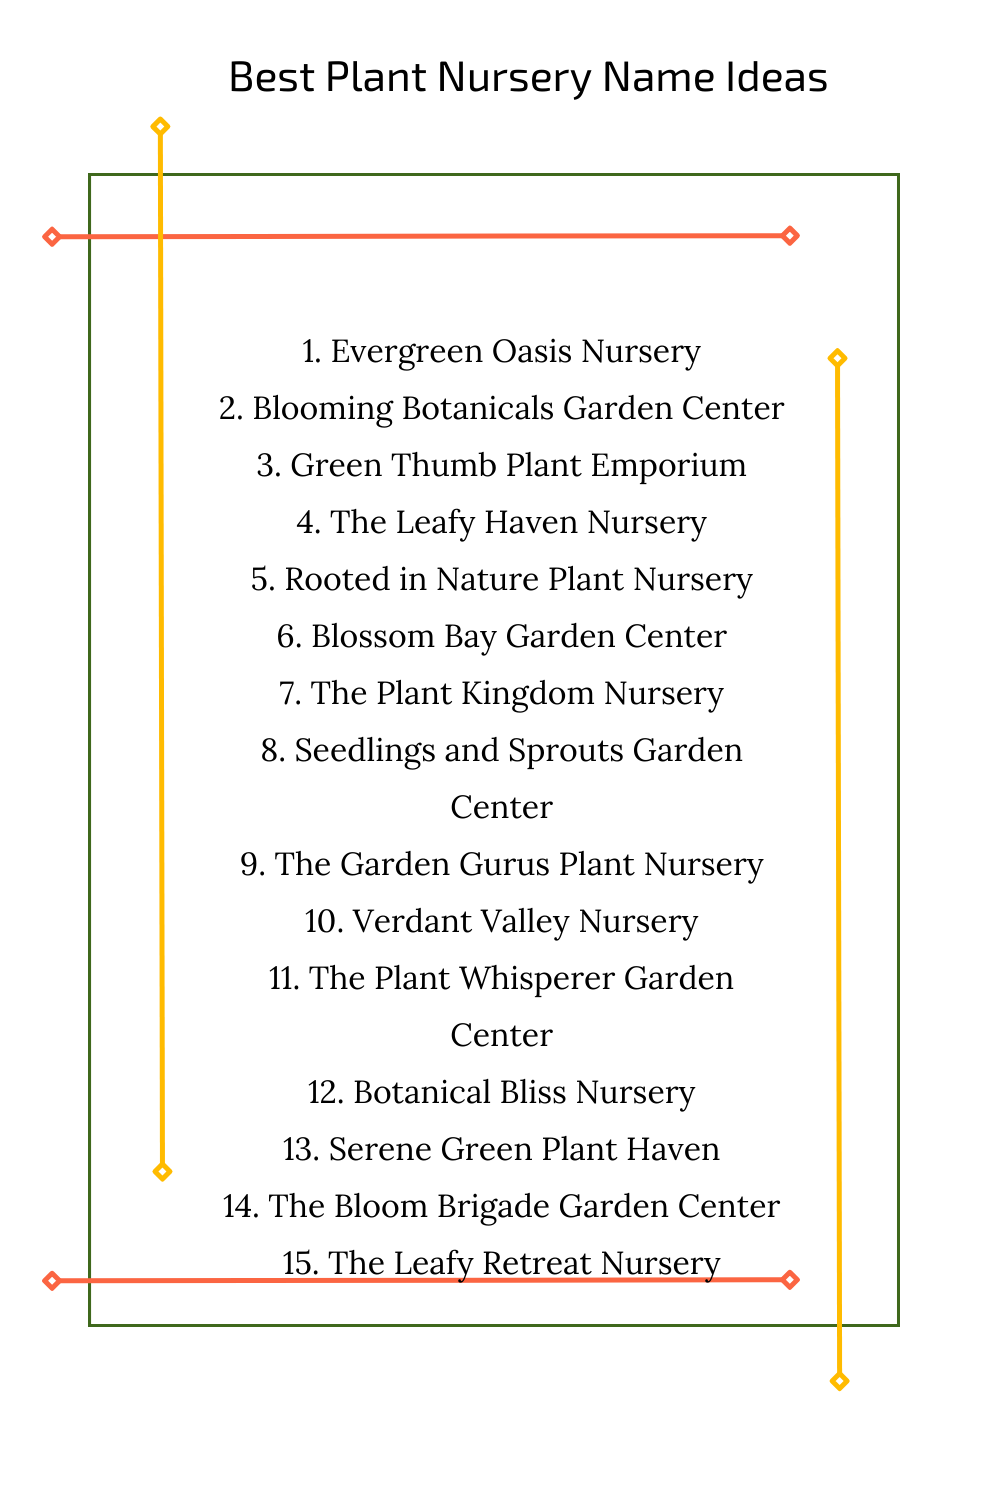 Best Plant Nursery Name Ideas